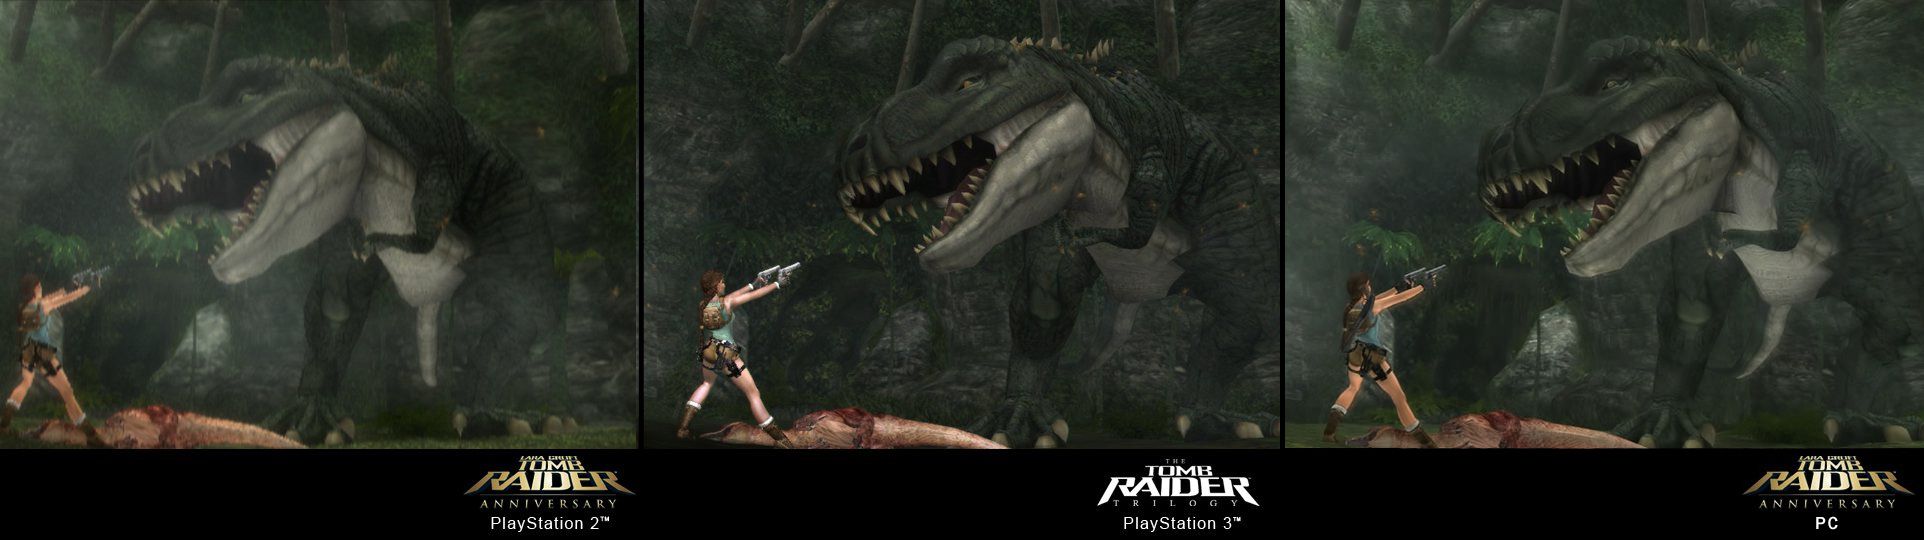 Tomb Raider Trilogy - Image 9